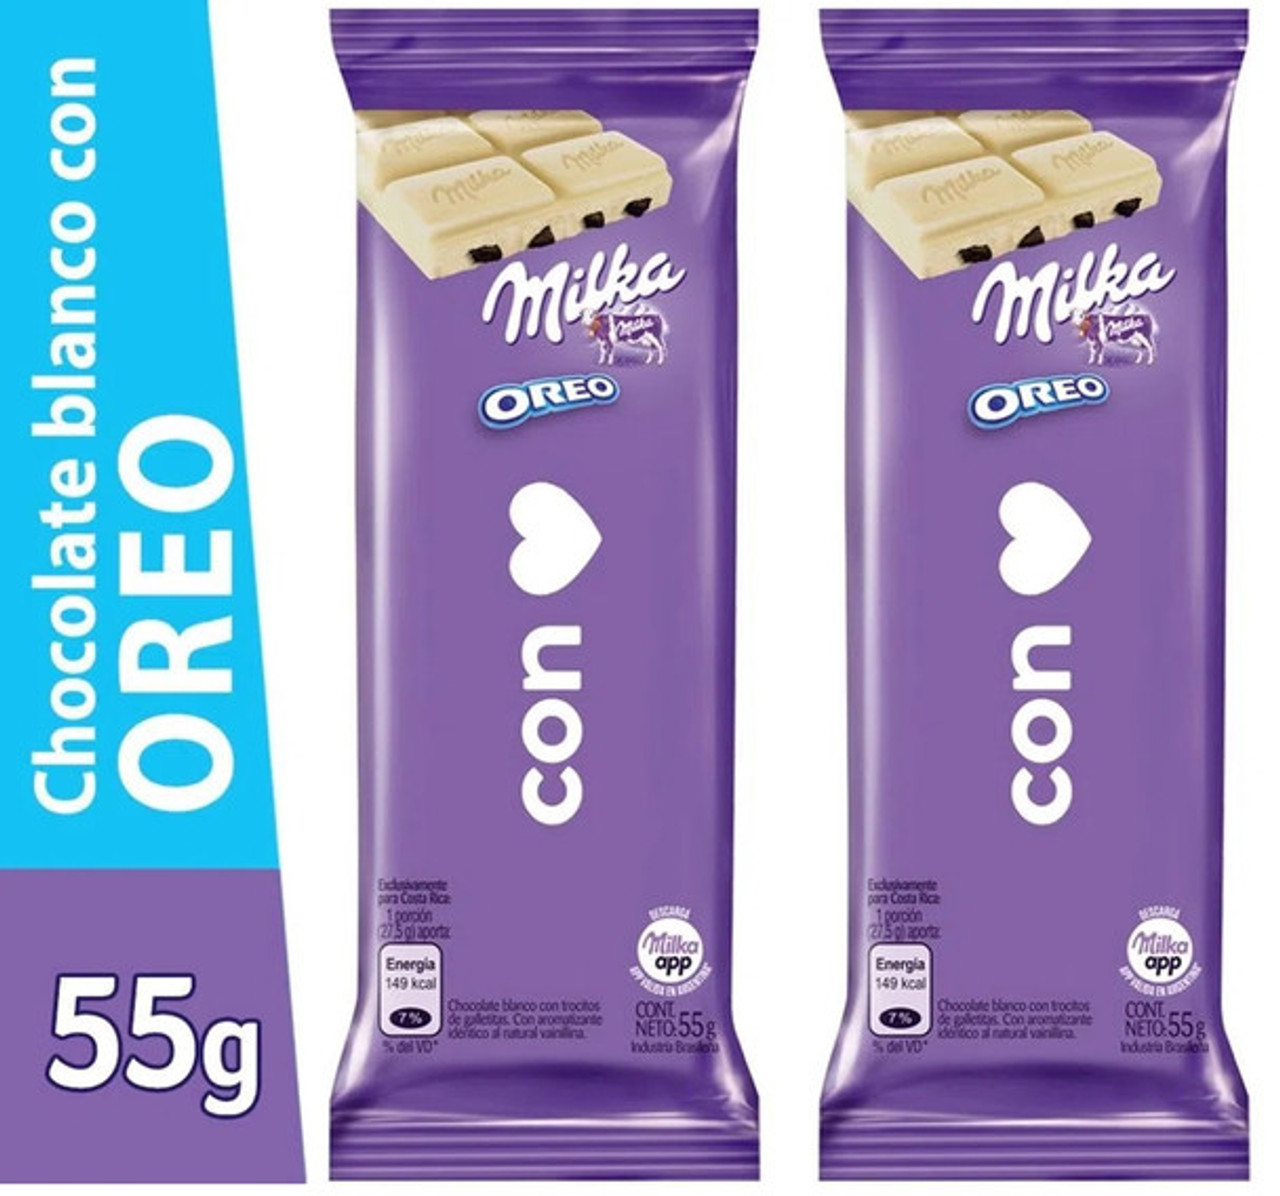 Chocolate Milka Oreo